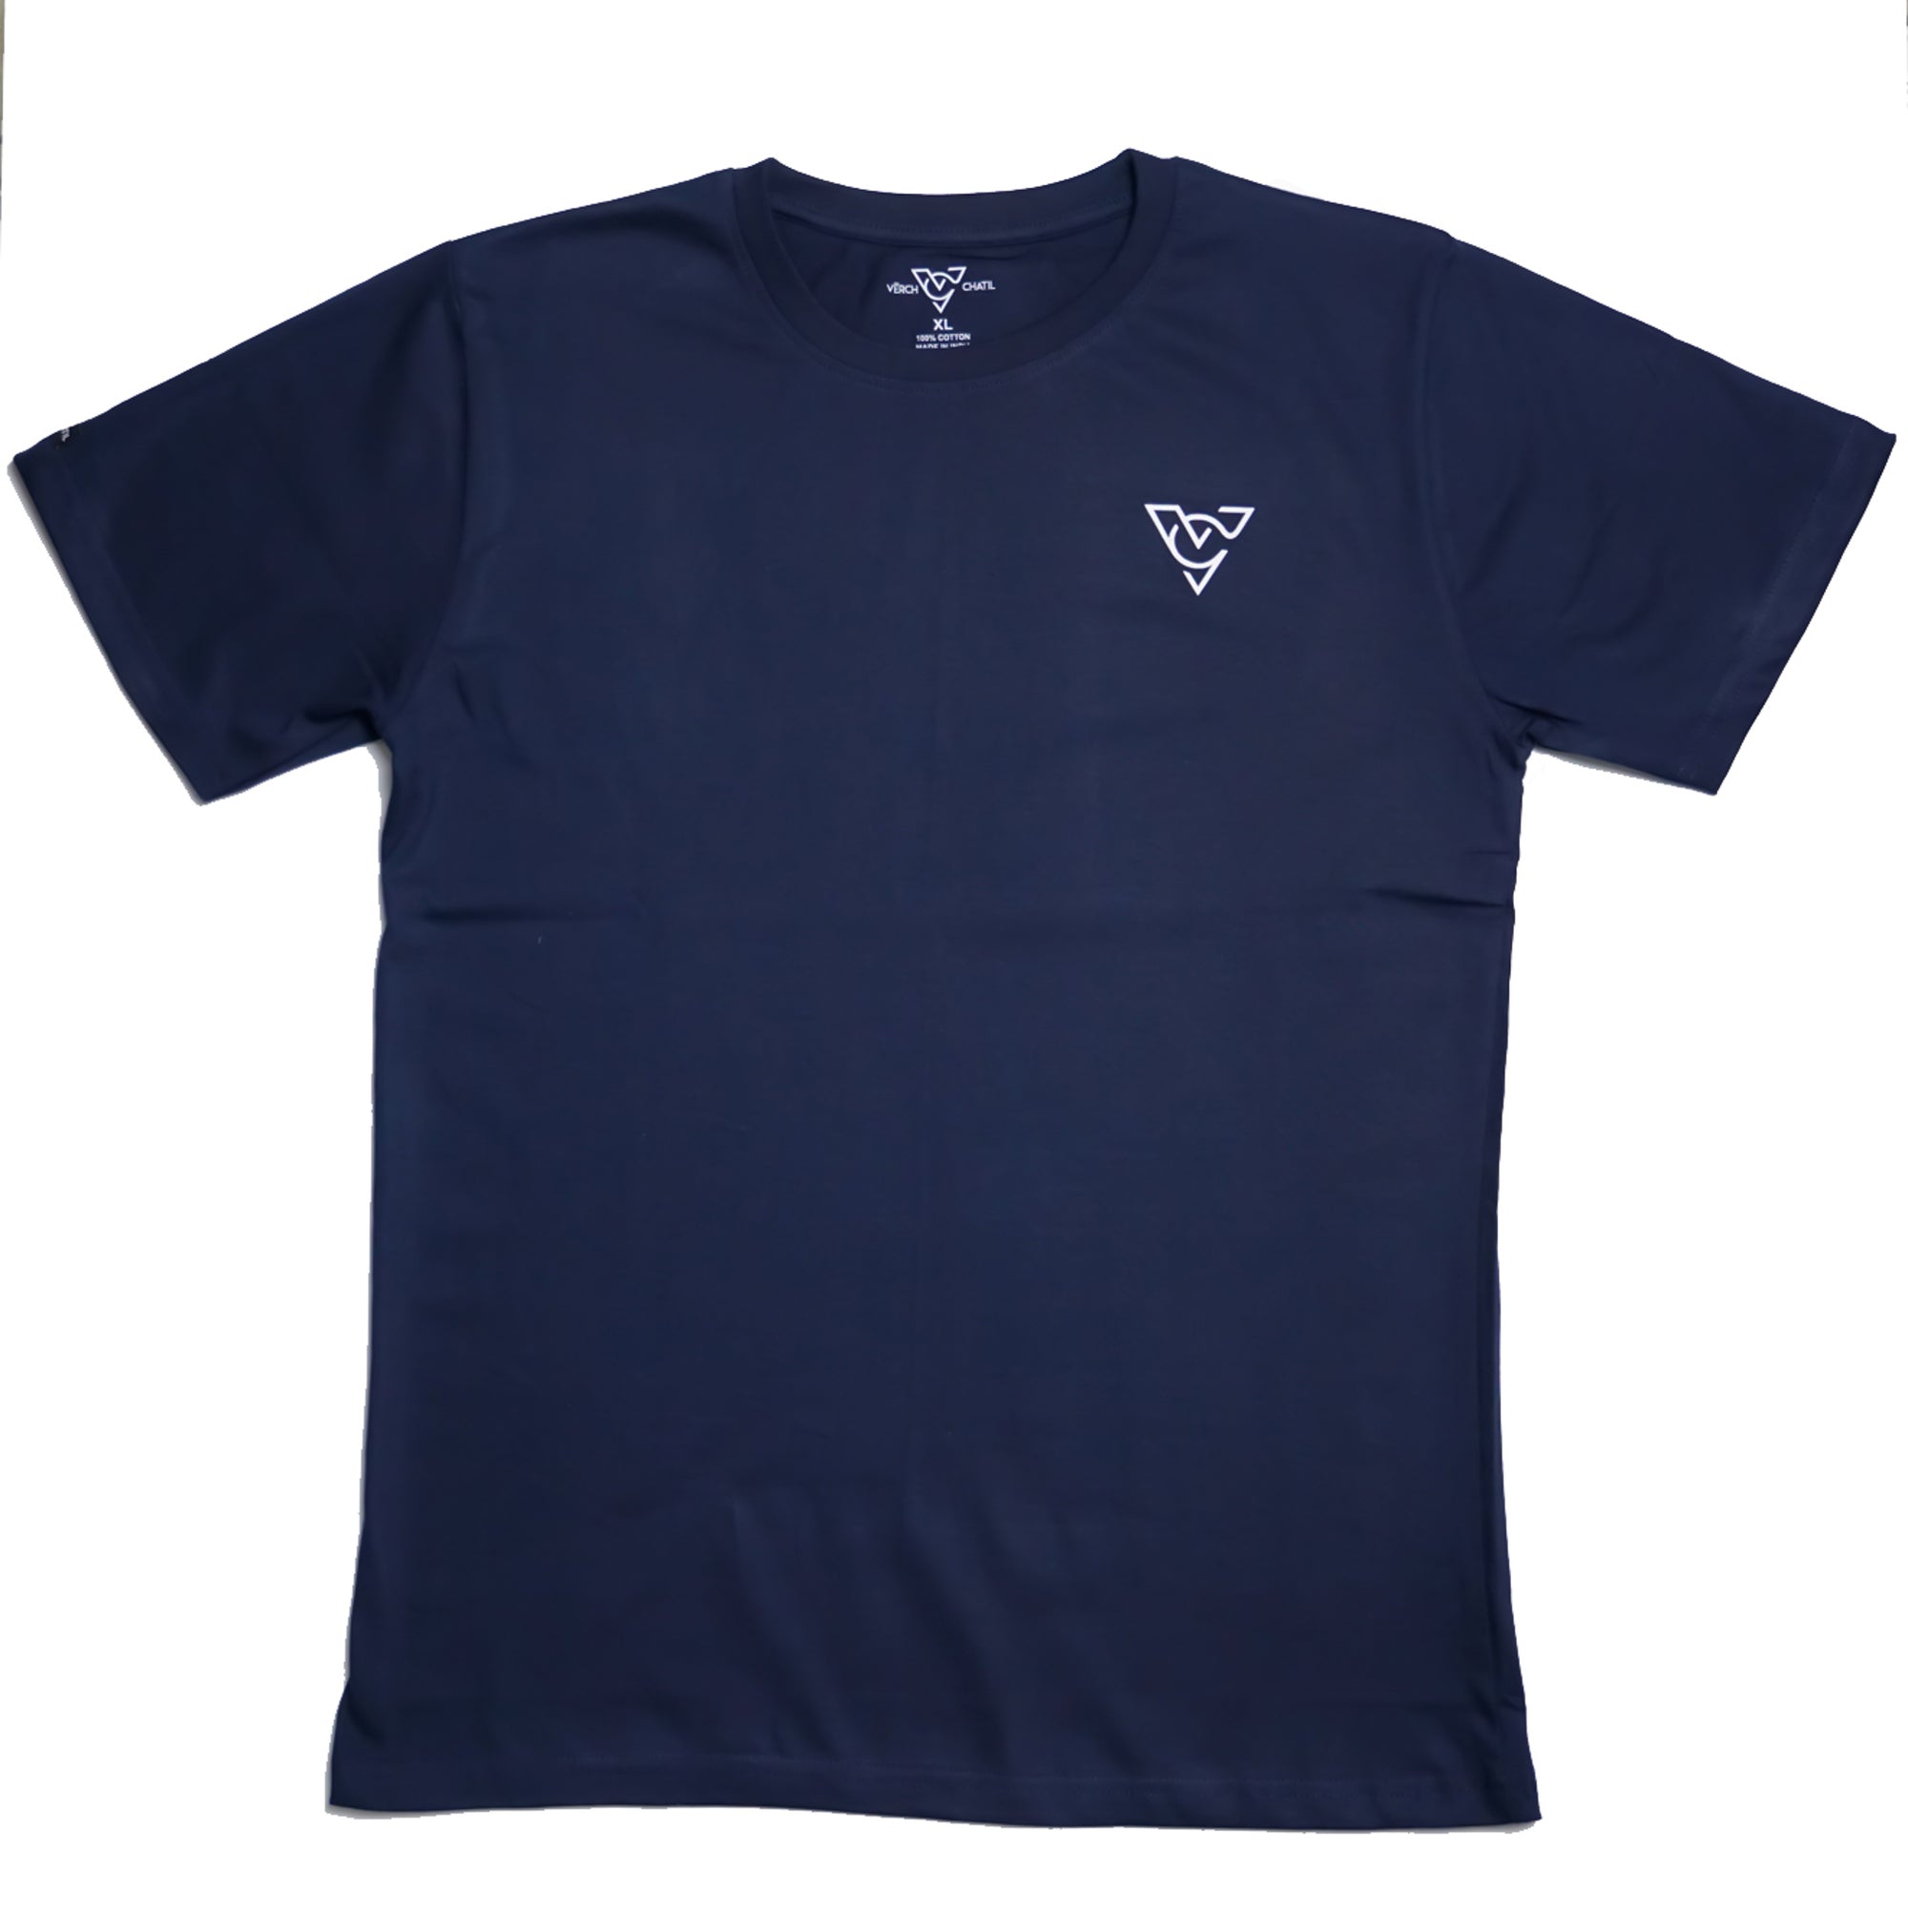 Verch Short Sleeve Navy Tshirt